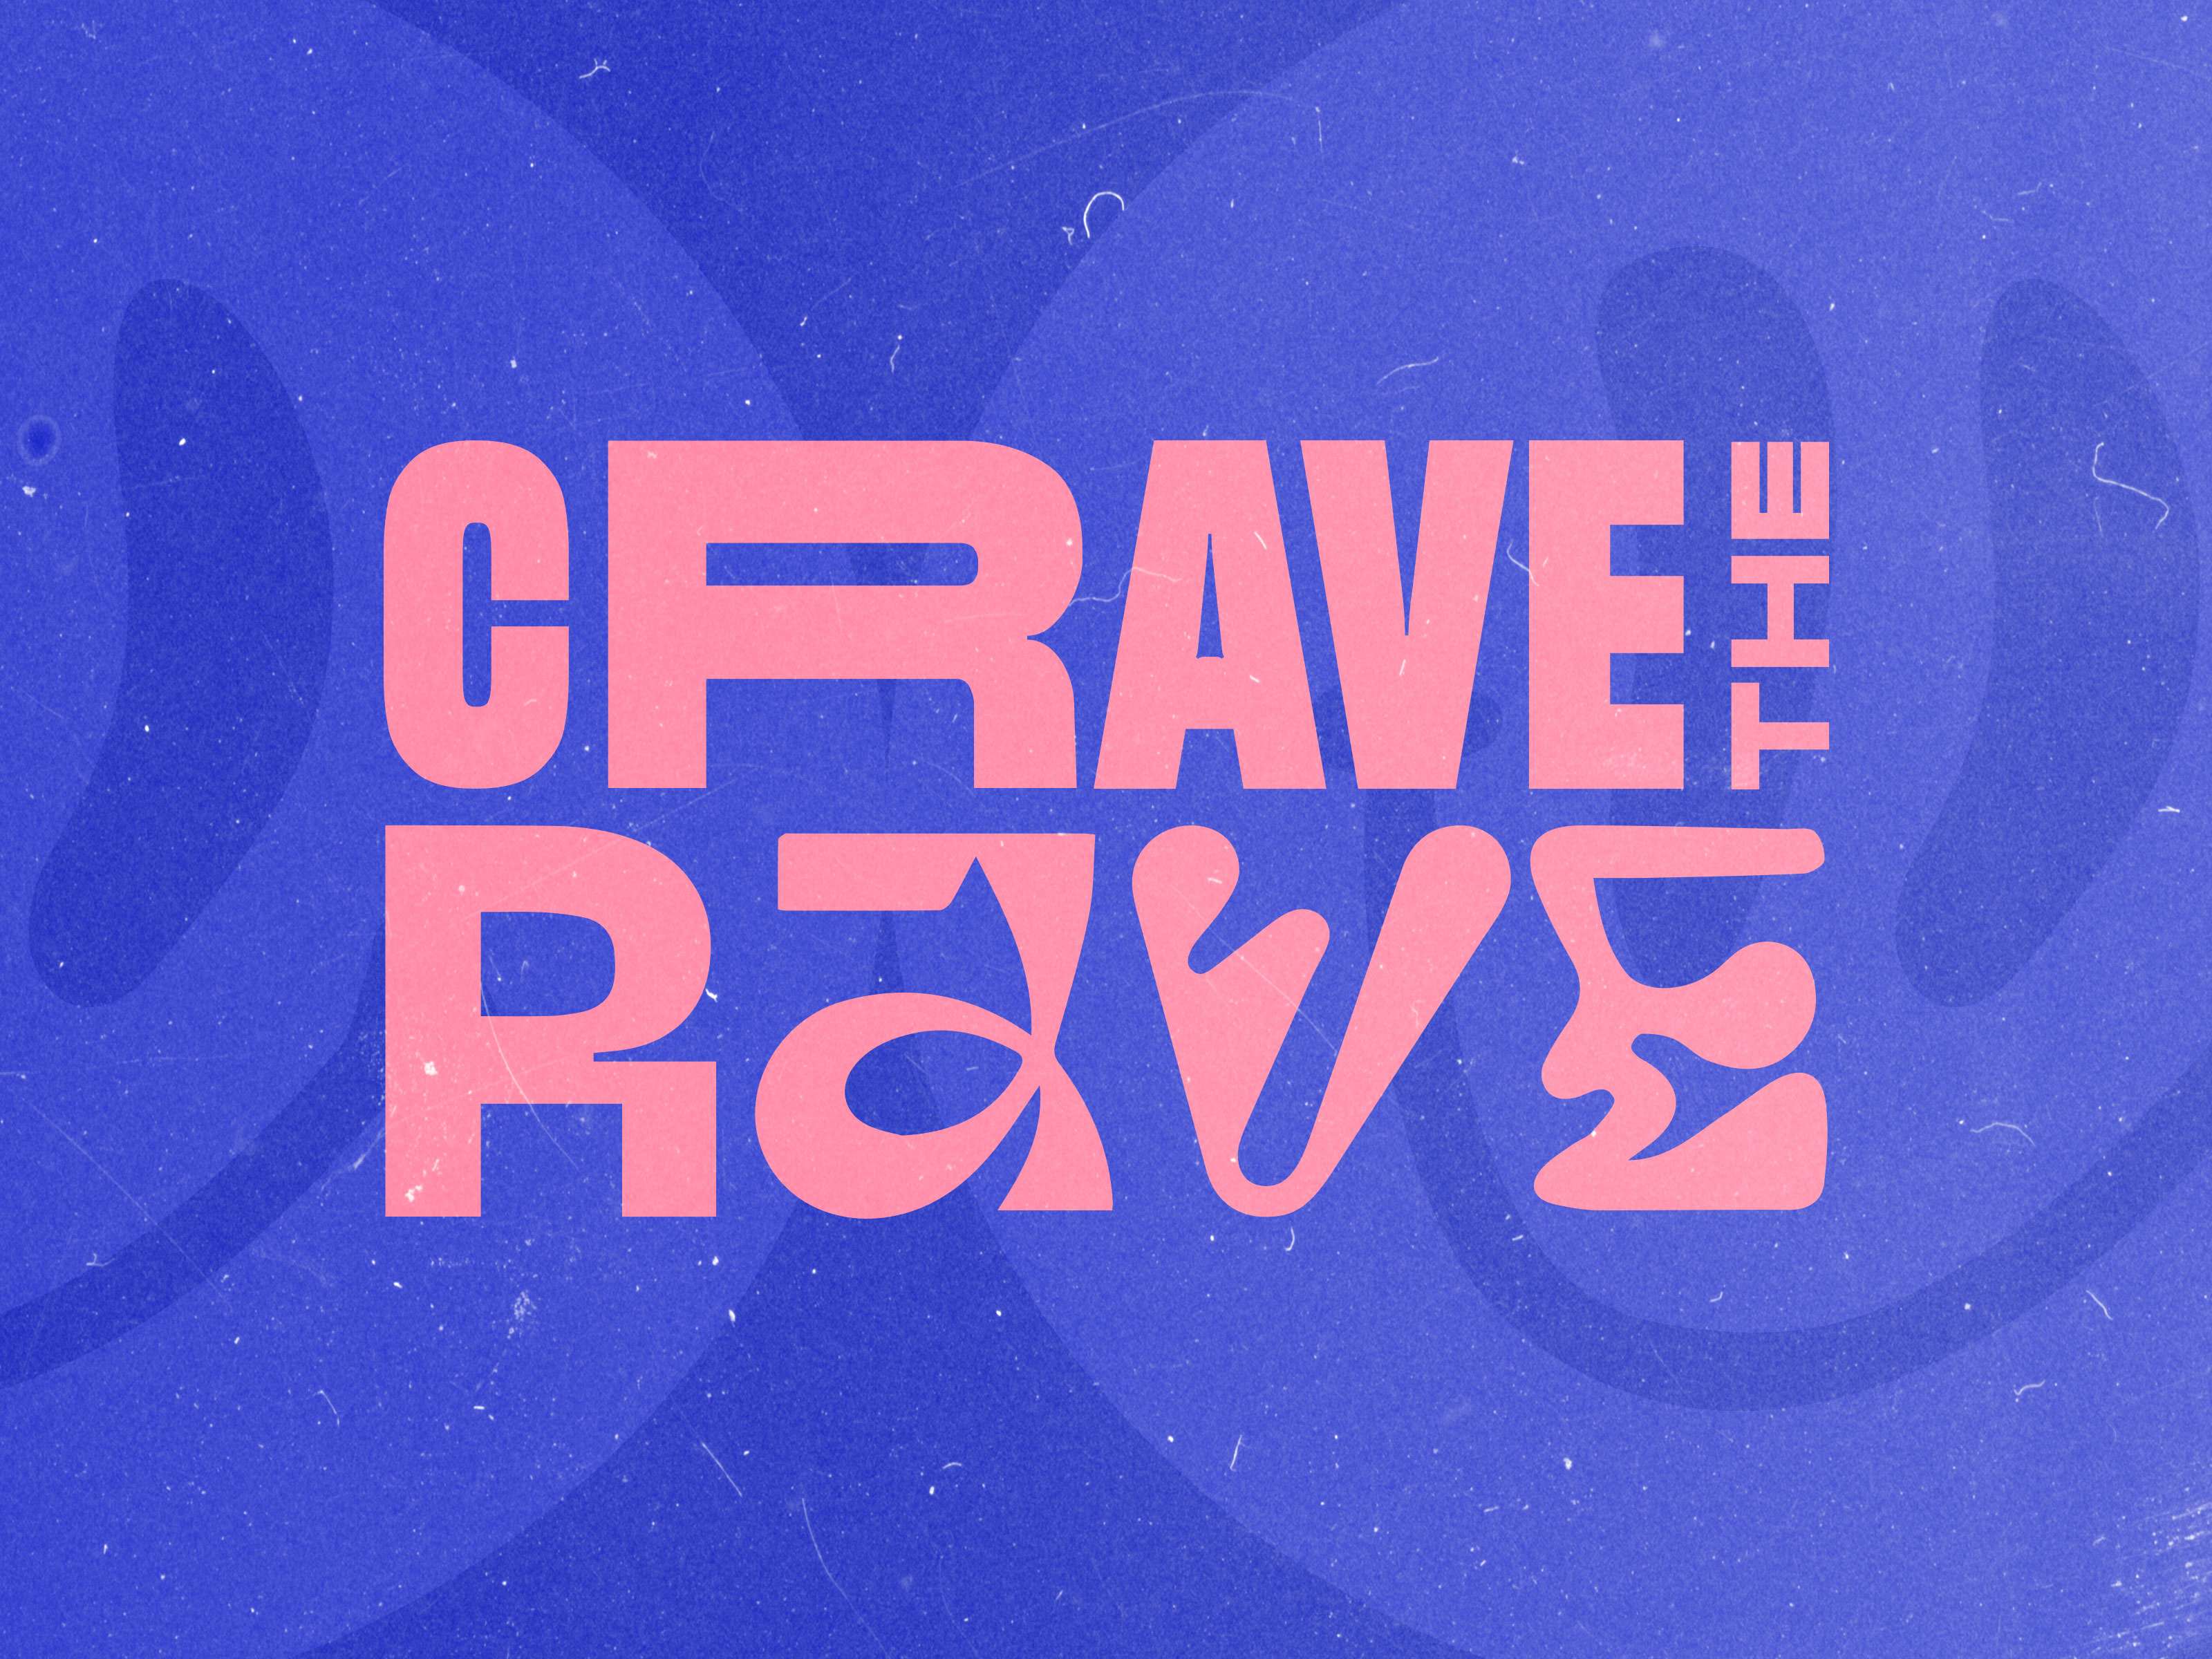 Crave the rave - Brand identity ⋅